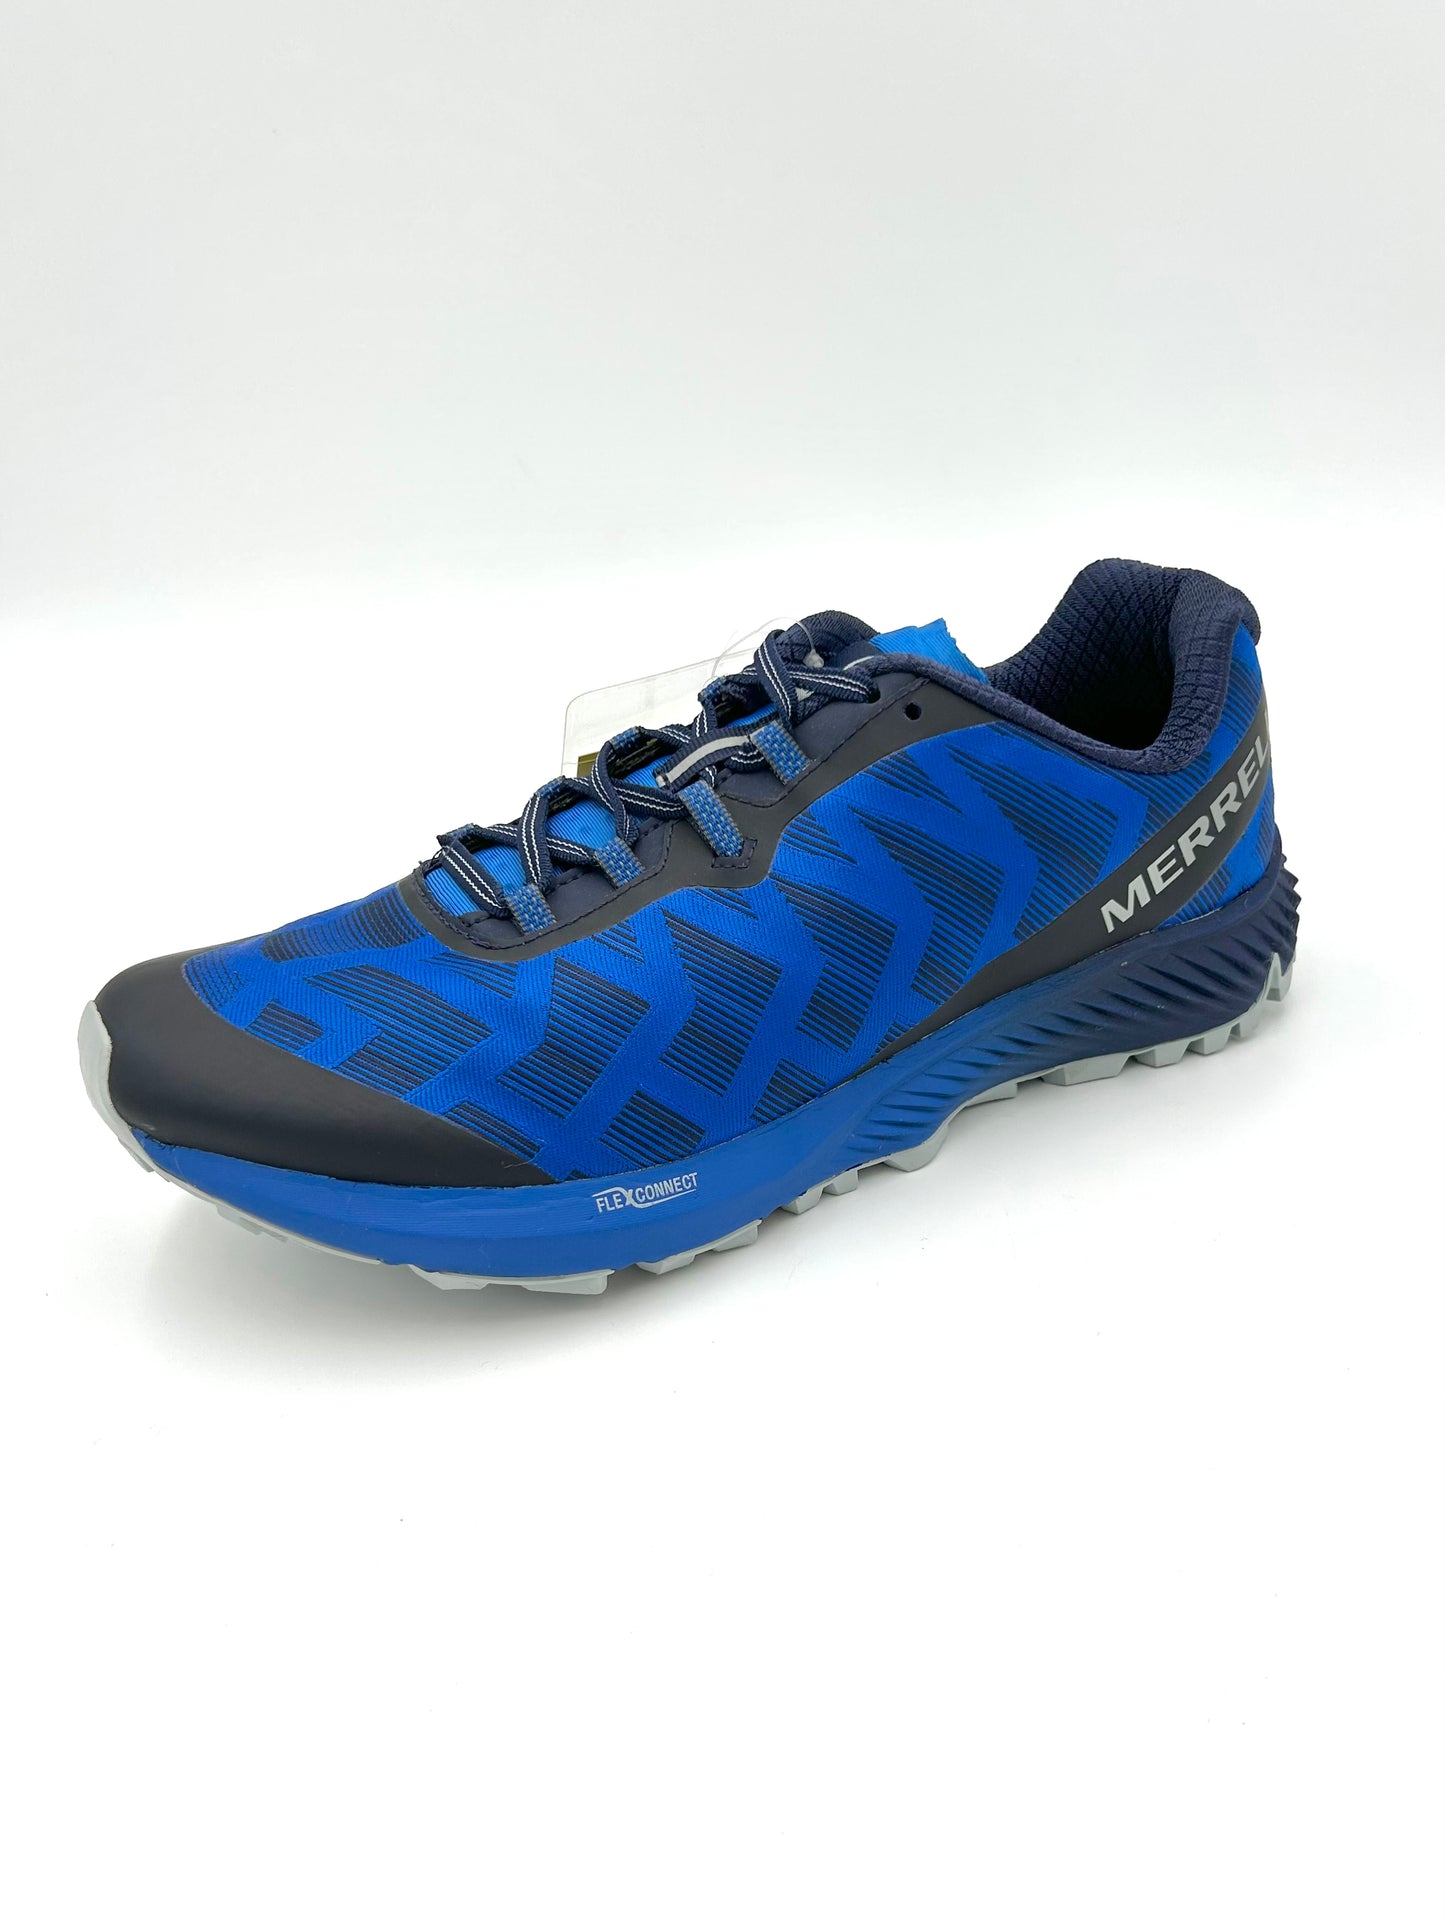 Merrell Sneakers Training Hyperlock - blue and black - Sebastiano Calzature